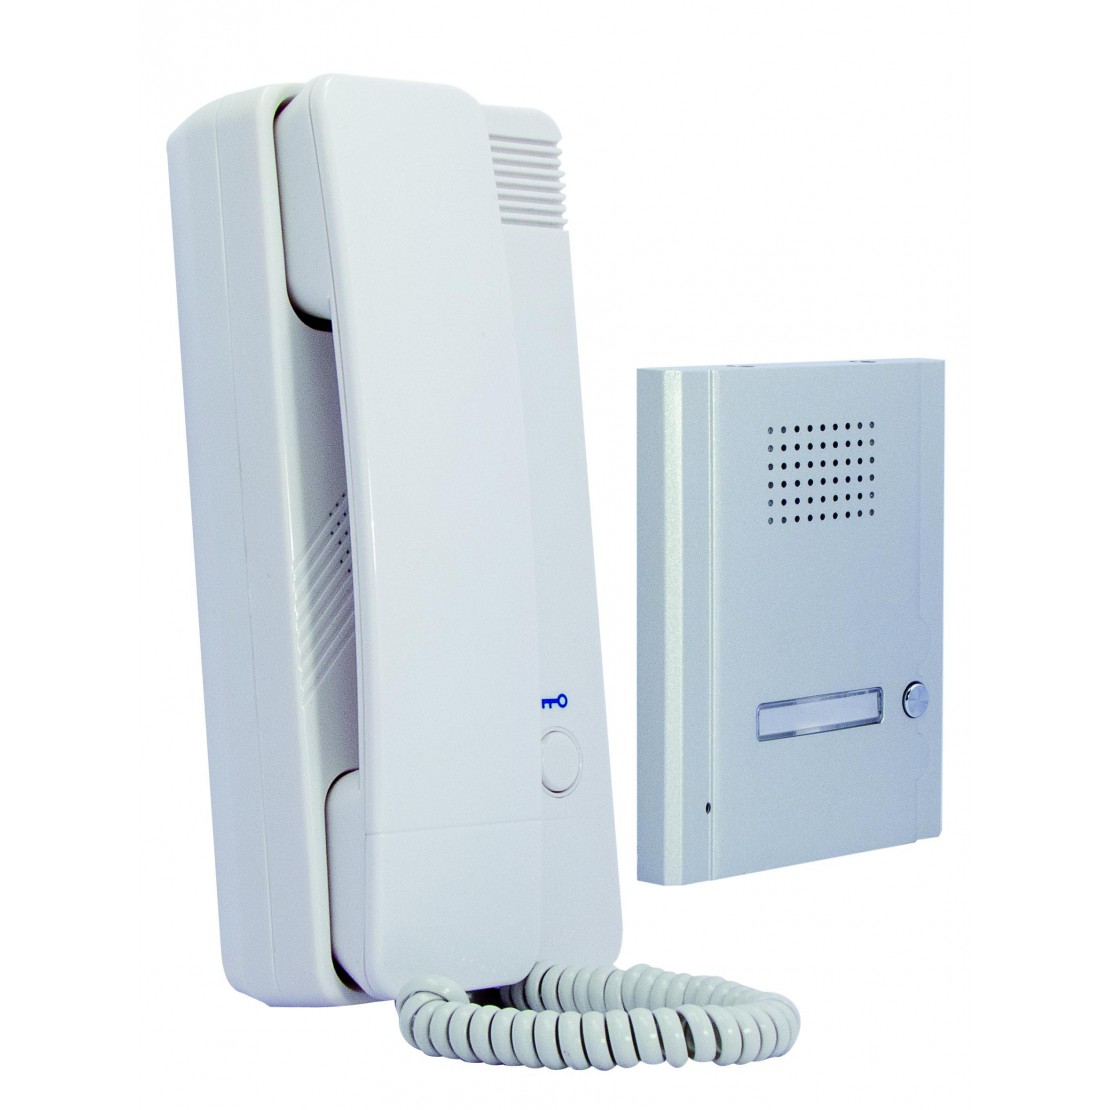 Multi-Tenant Video Intercom System - Zions Security Alarms